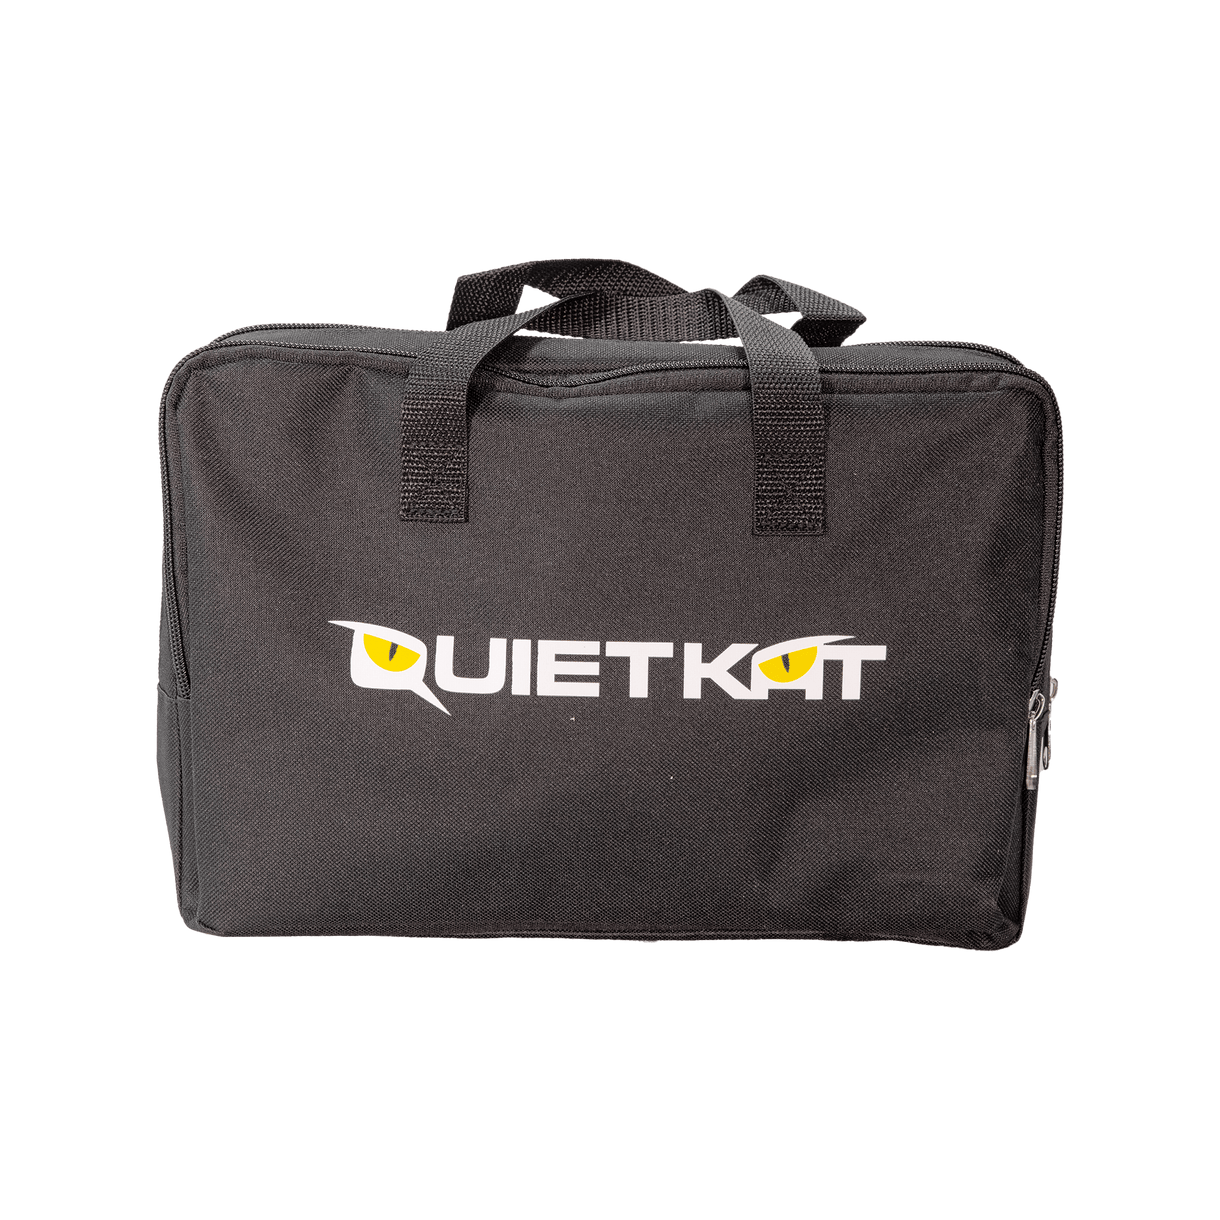 Quietkat Portable E-Bike Solar Charging Station